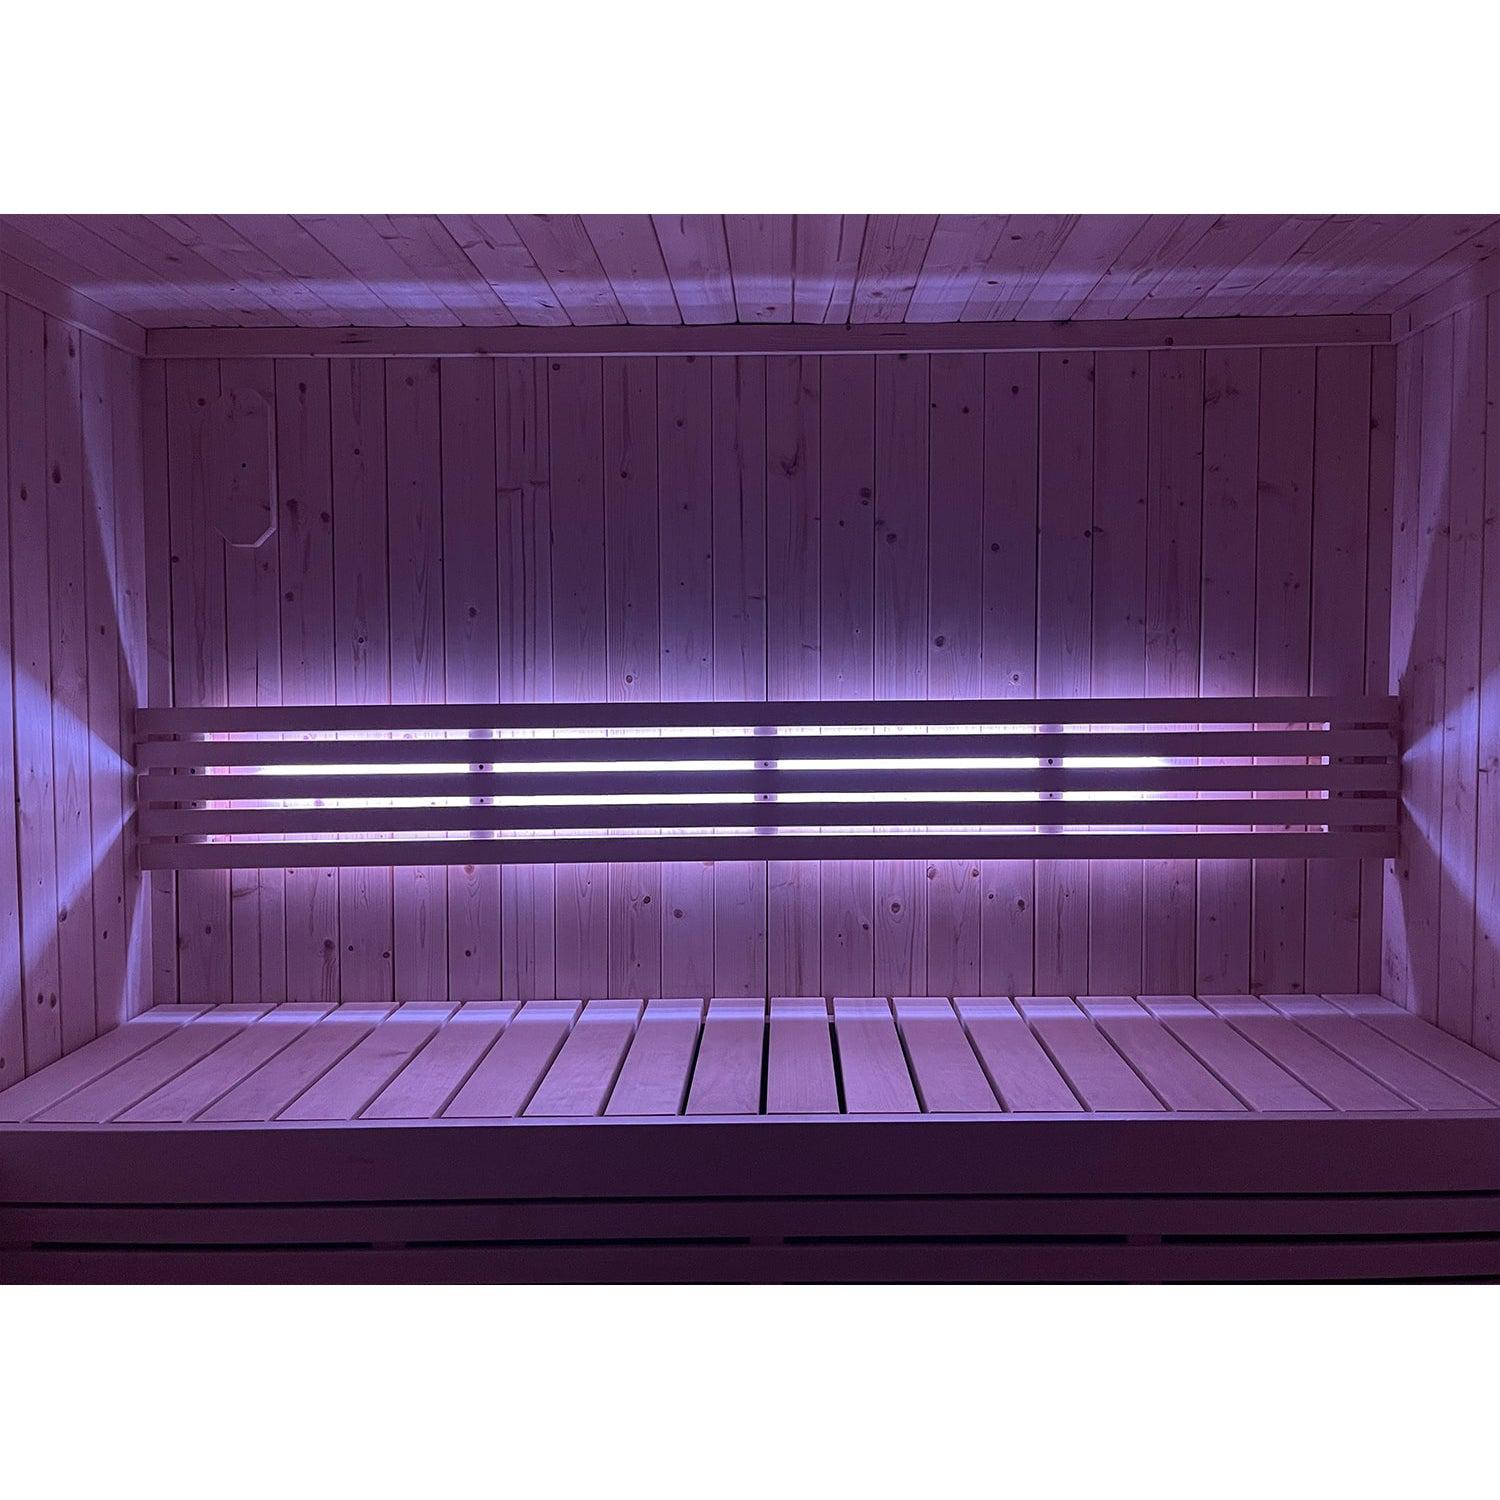 SaunaLife Mood Lighting for Model X7 Sauna - Purely Relaxation